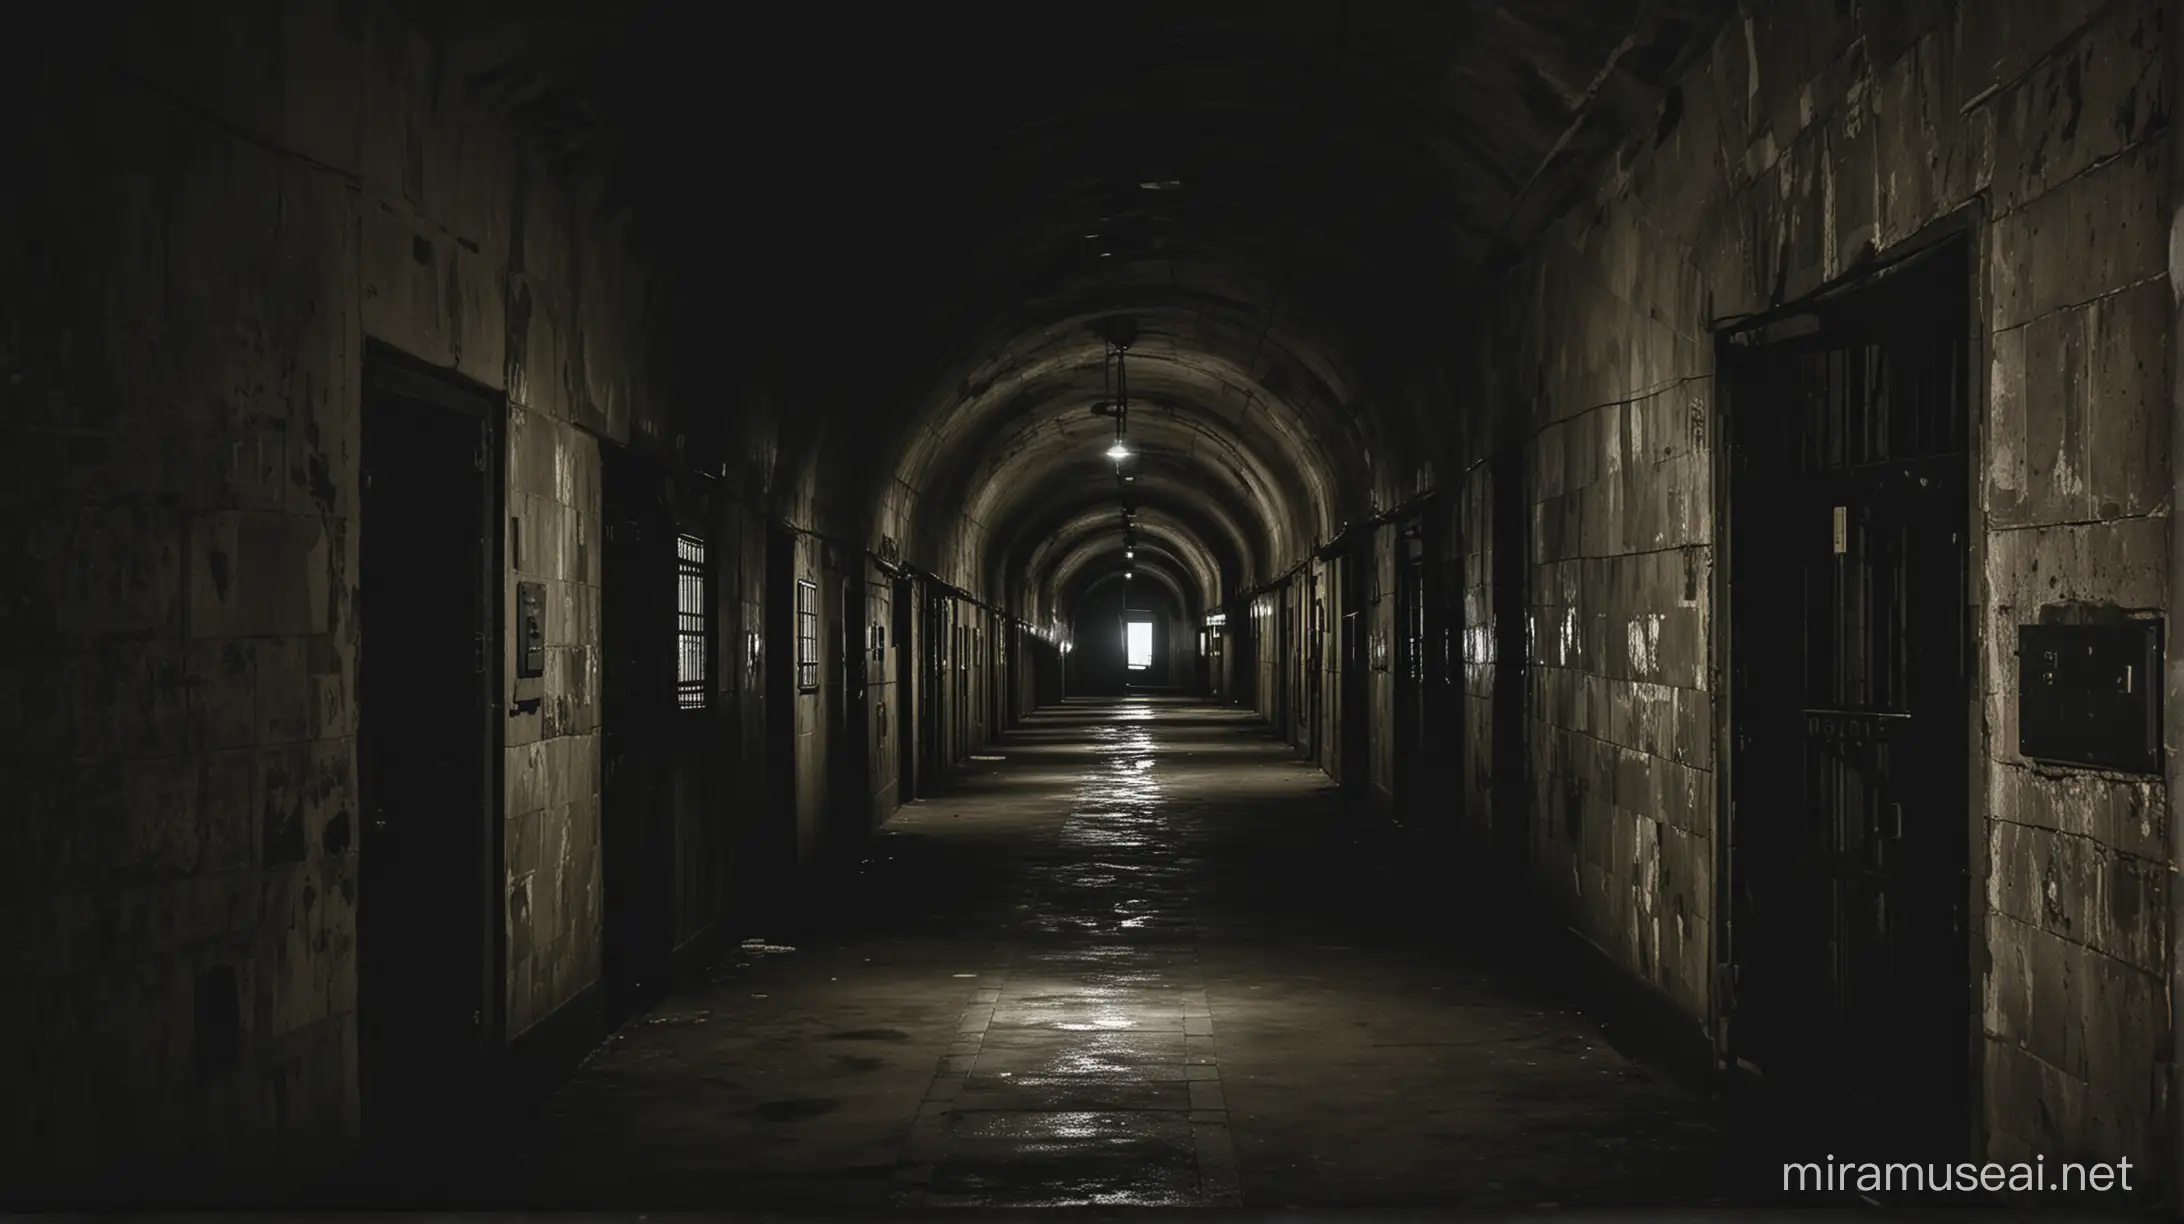 Eerie Abandoned Prison Cells in Dark Desolation